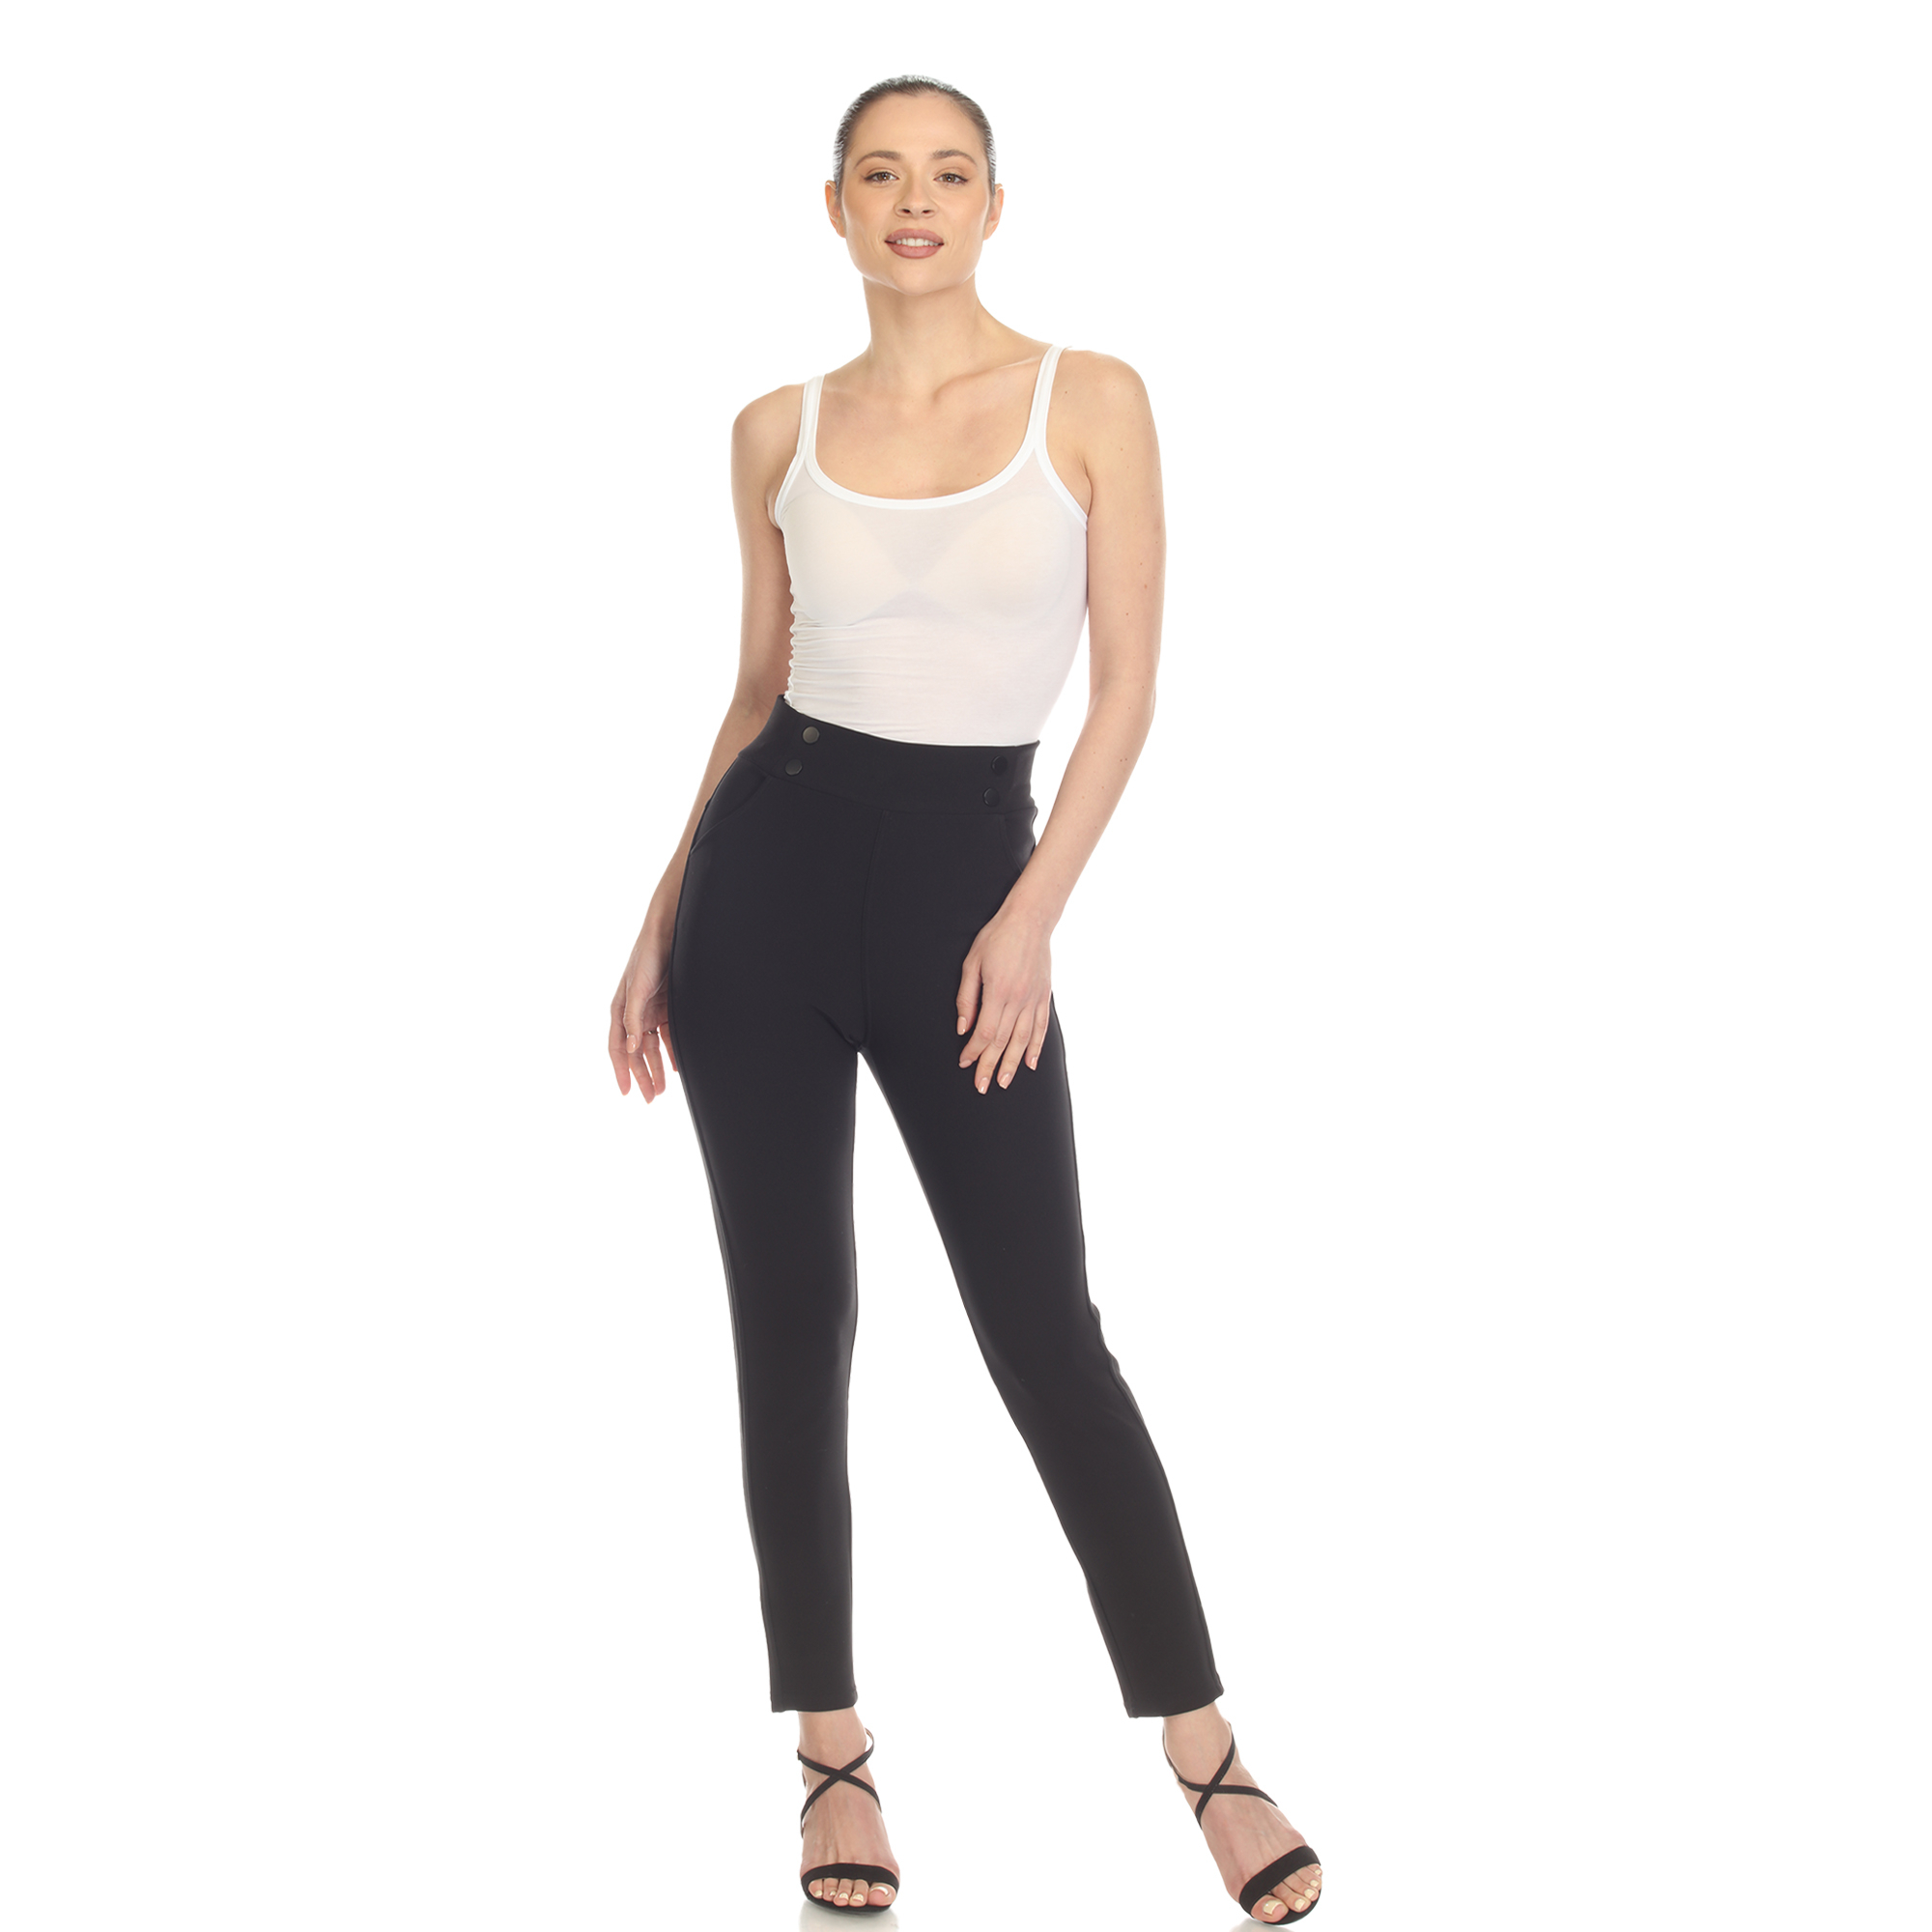 White Mark Women's Super Soft Elastic Waistband High Waist Scuba Pants With Pockets - Black, 1X